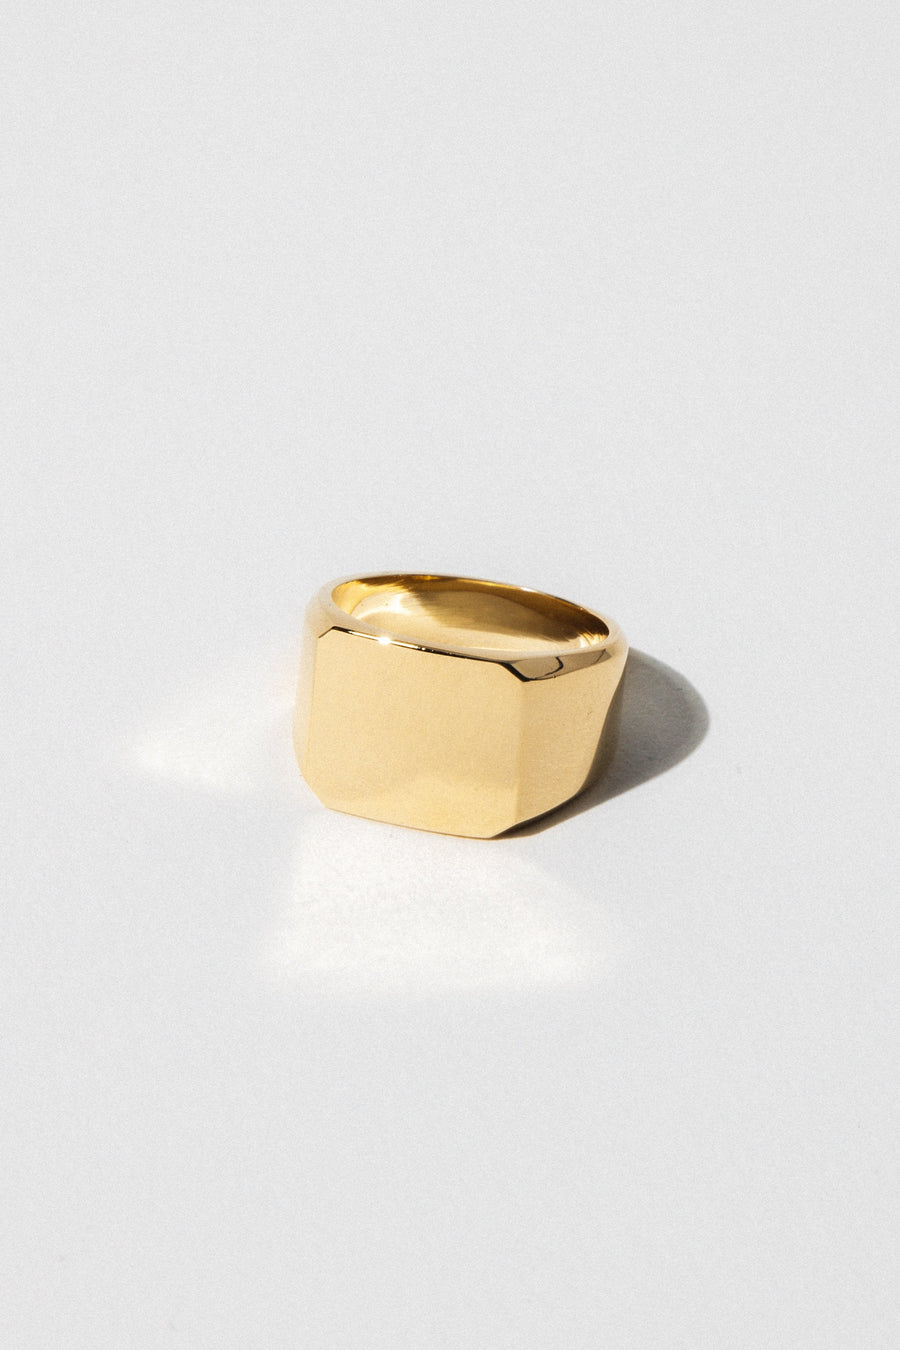 Studio Grun Jewelry US 6 / Gold Rectangle Signet Ring